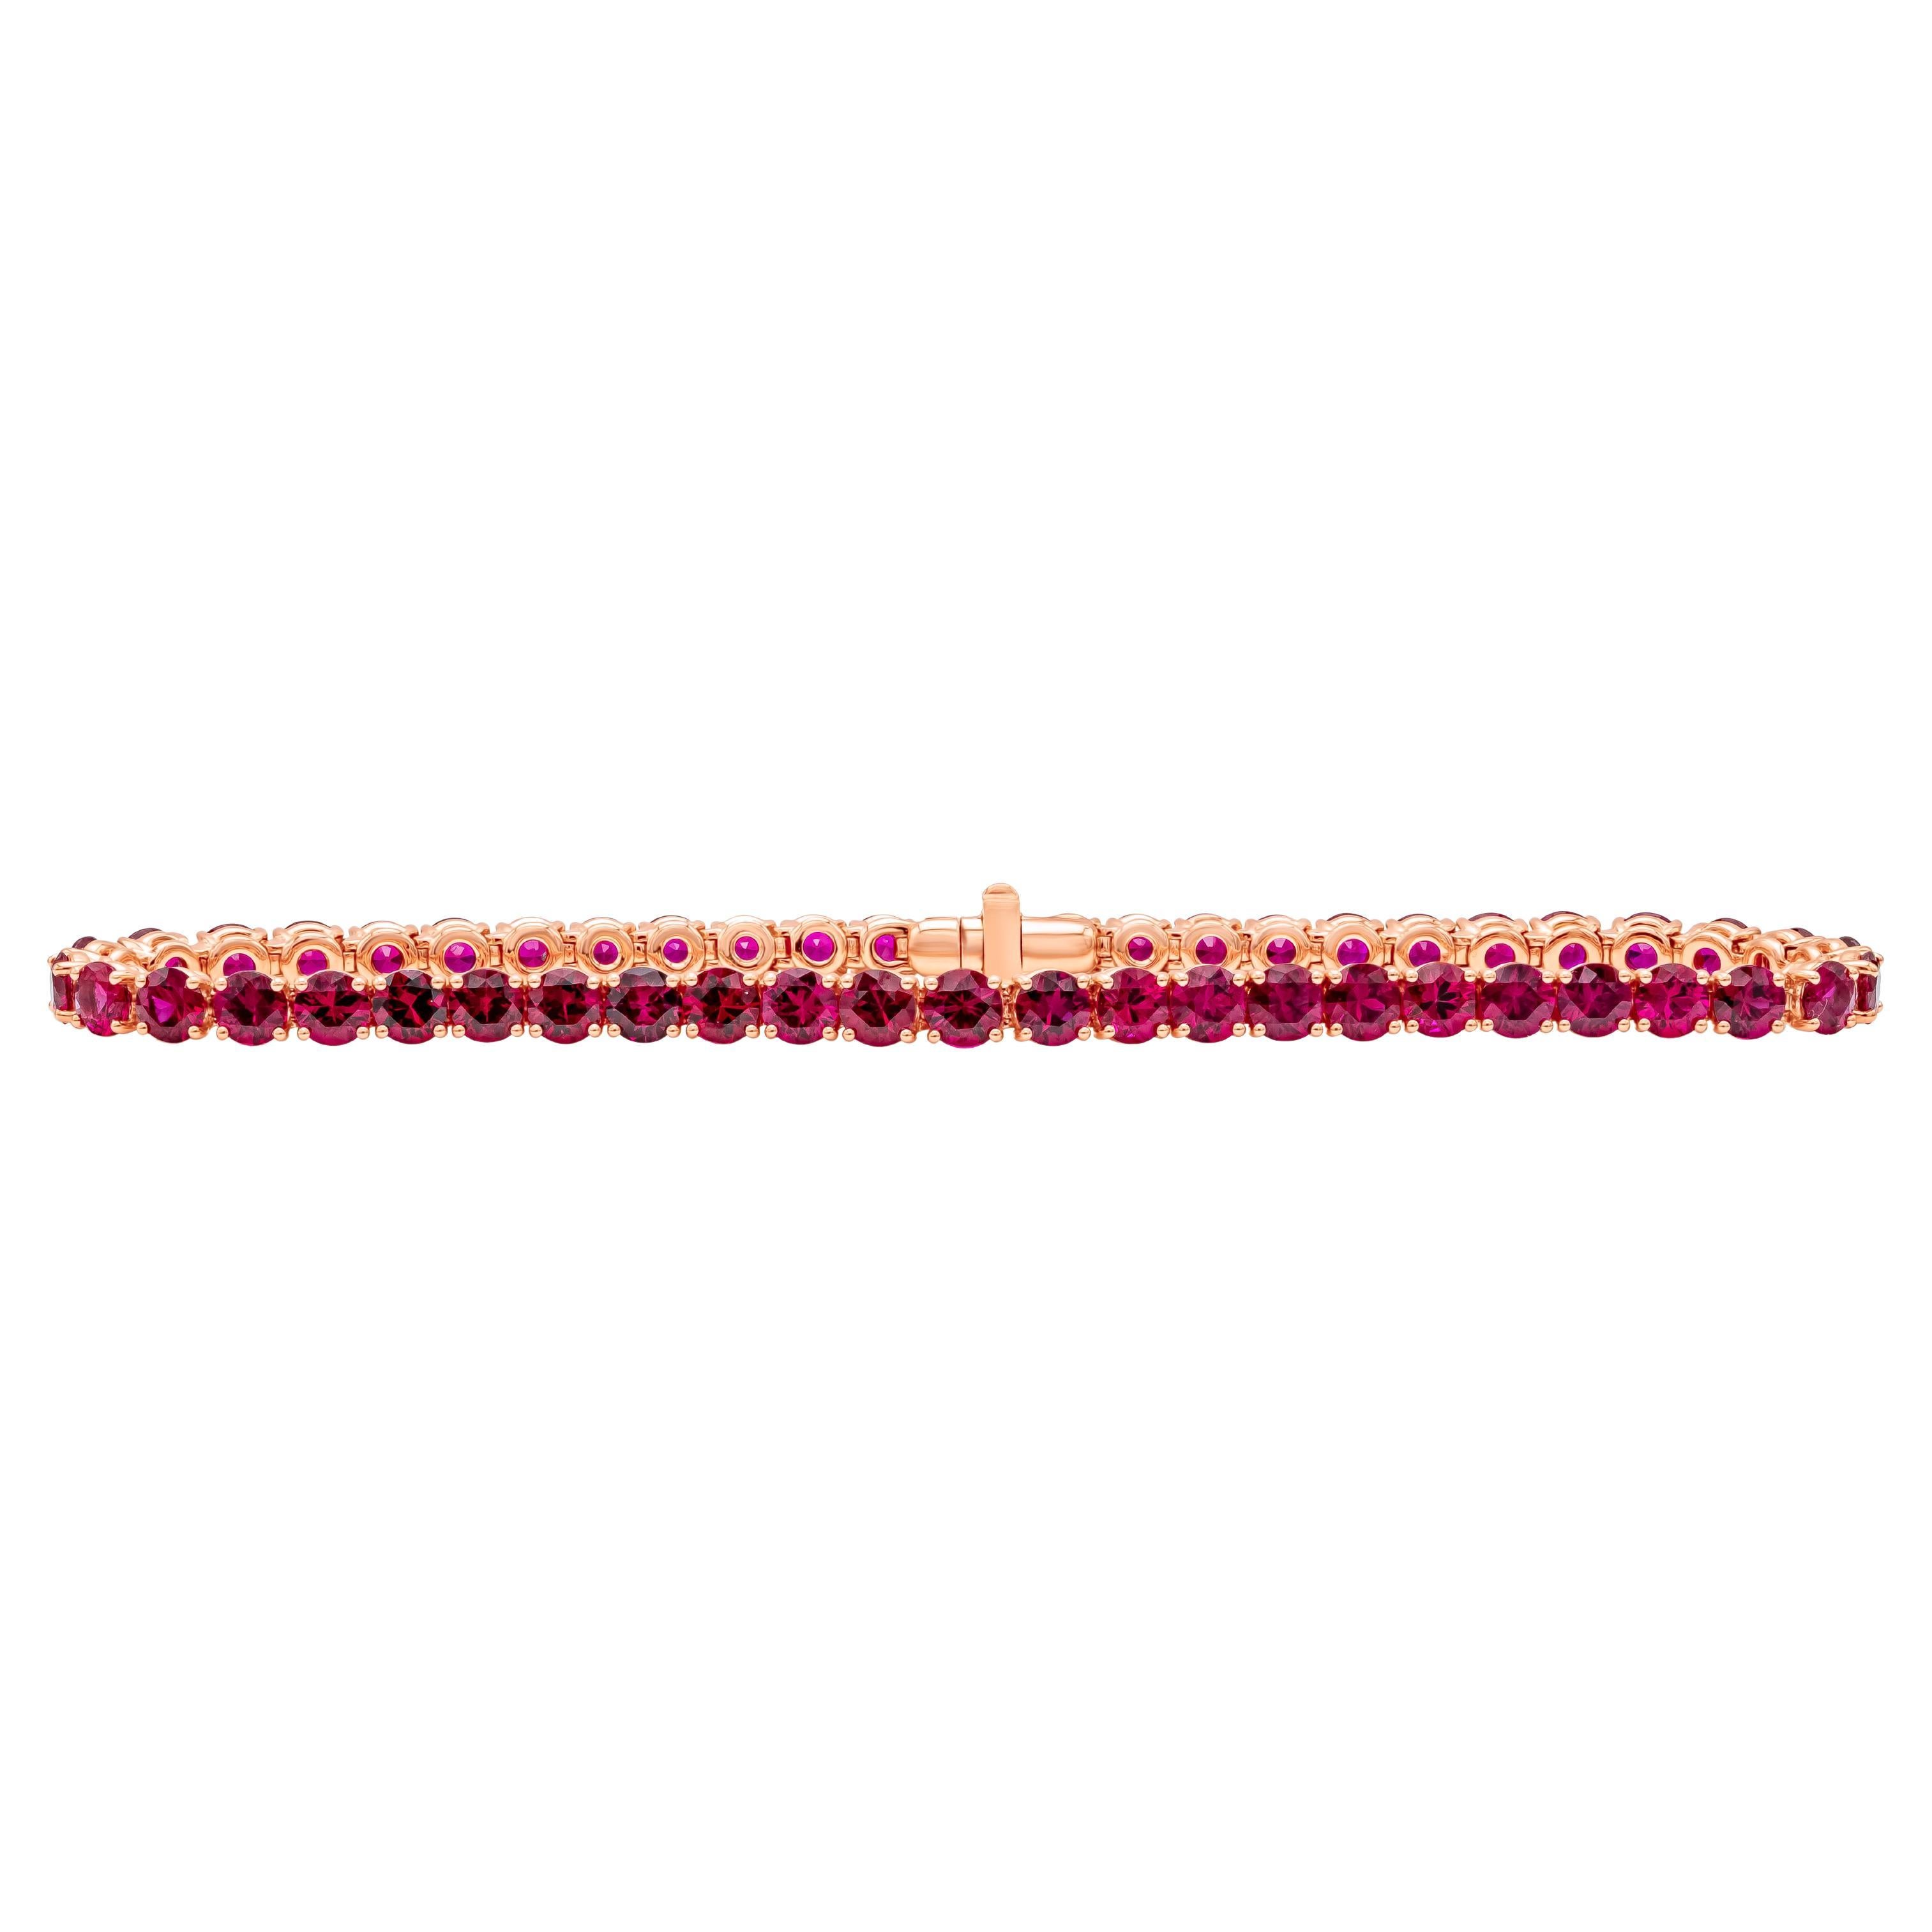 Roman Malakov - Bracelet de tennis en rubis birman de 9,39 carats, taille arrondie et brillante. 